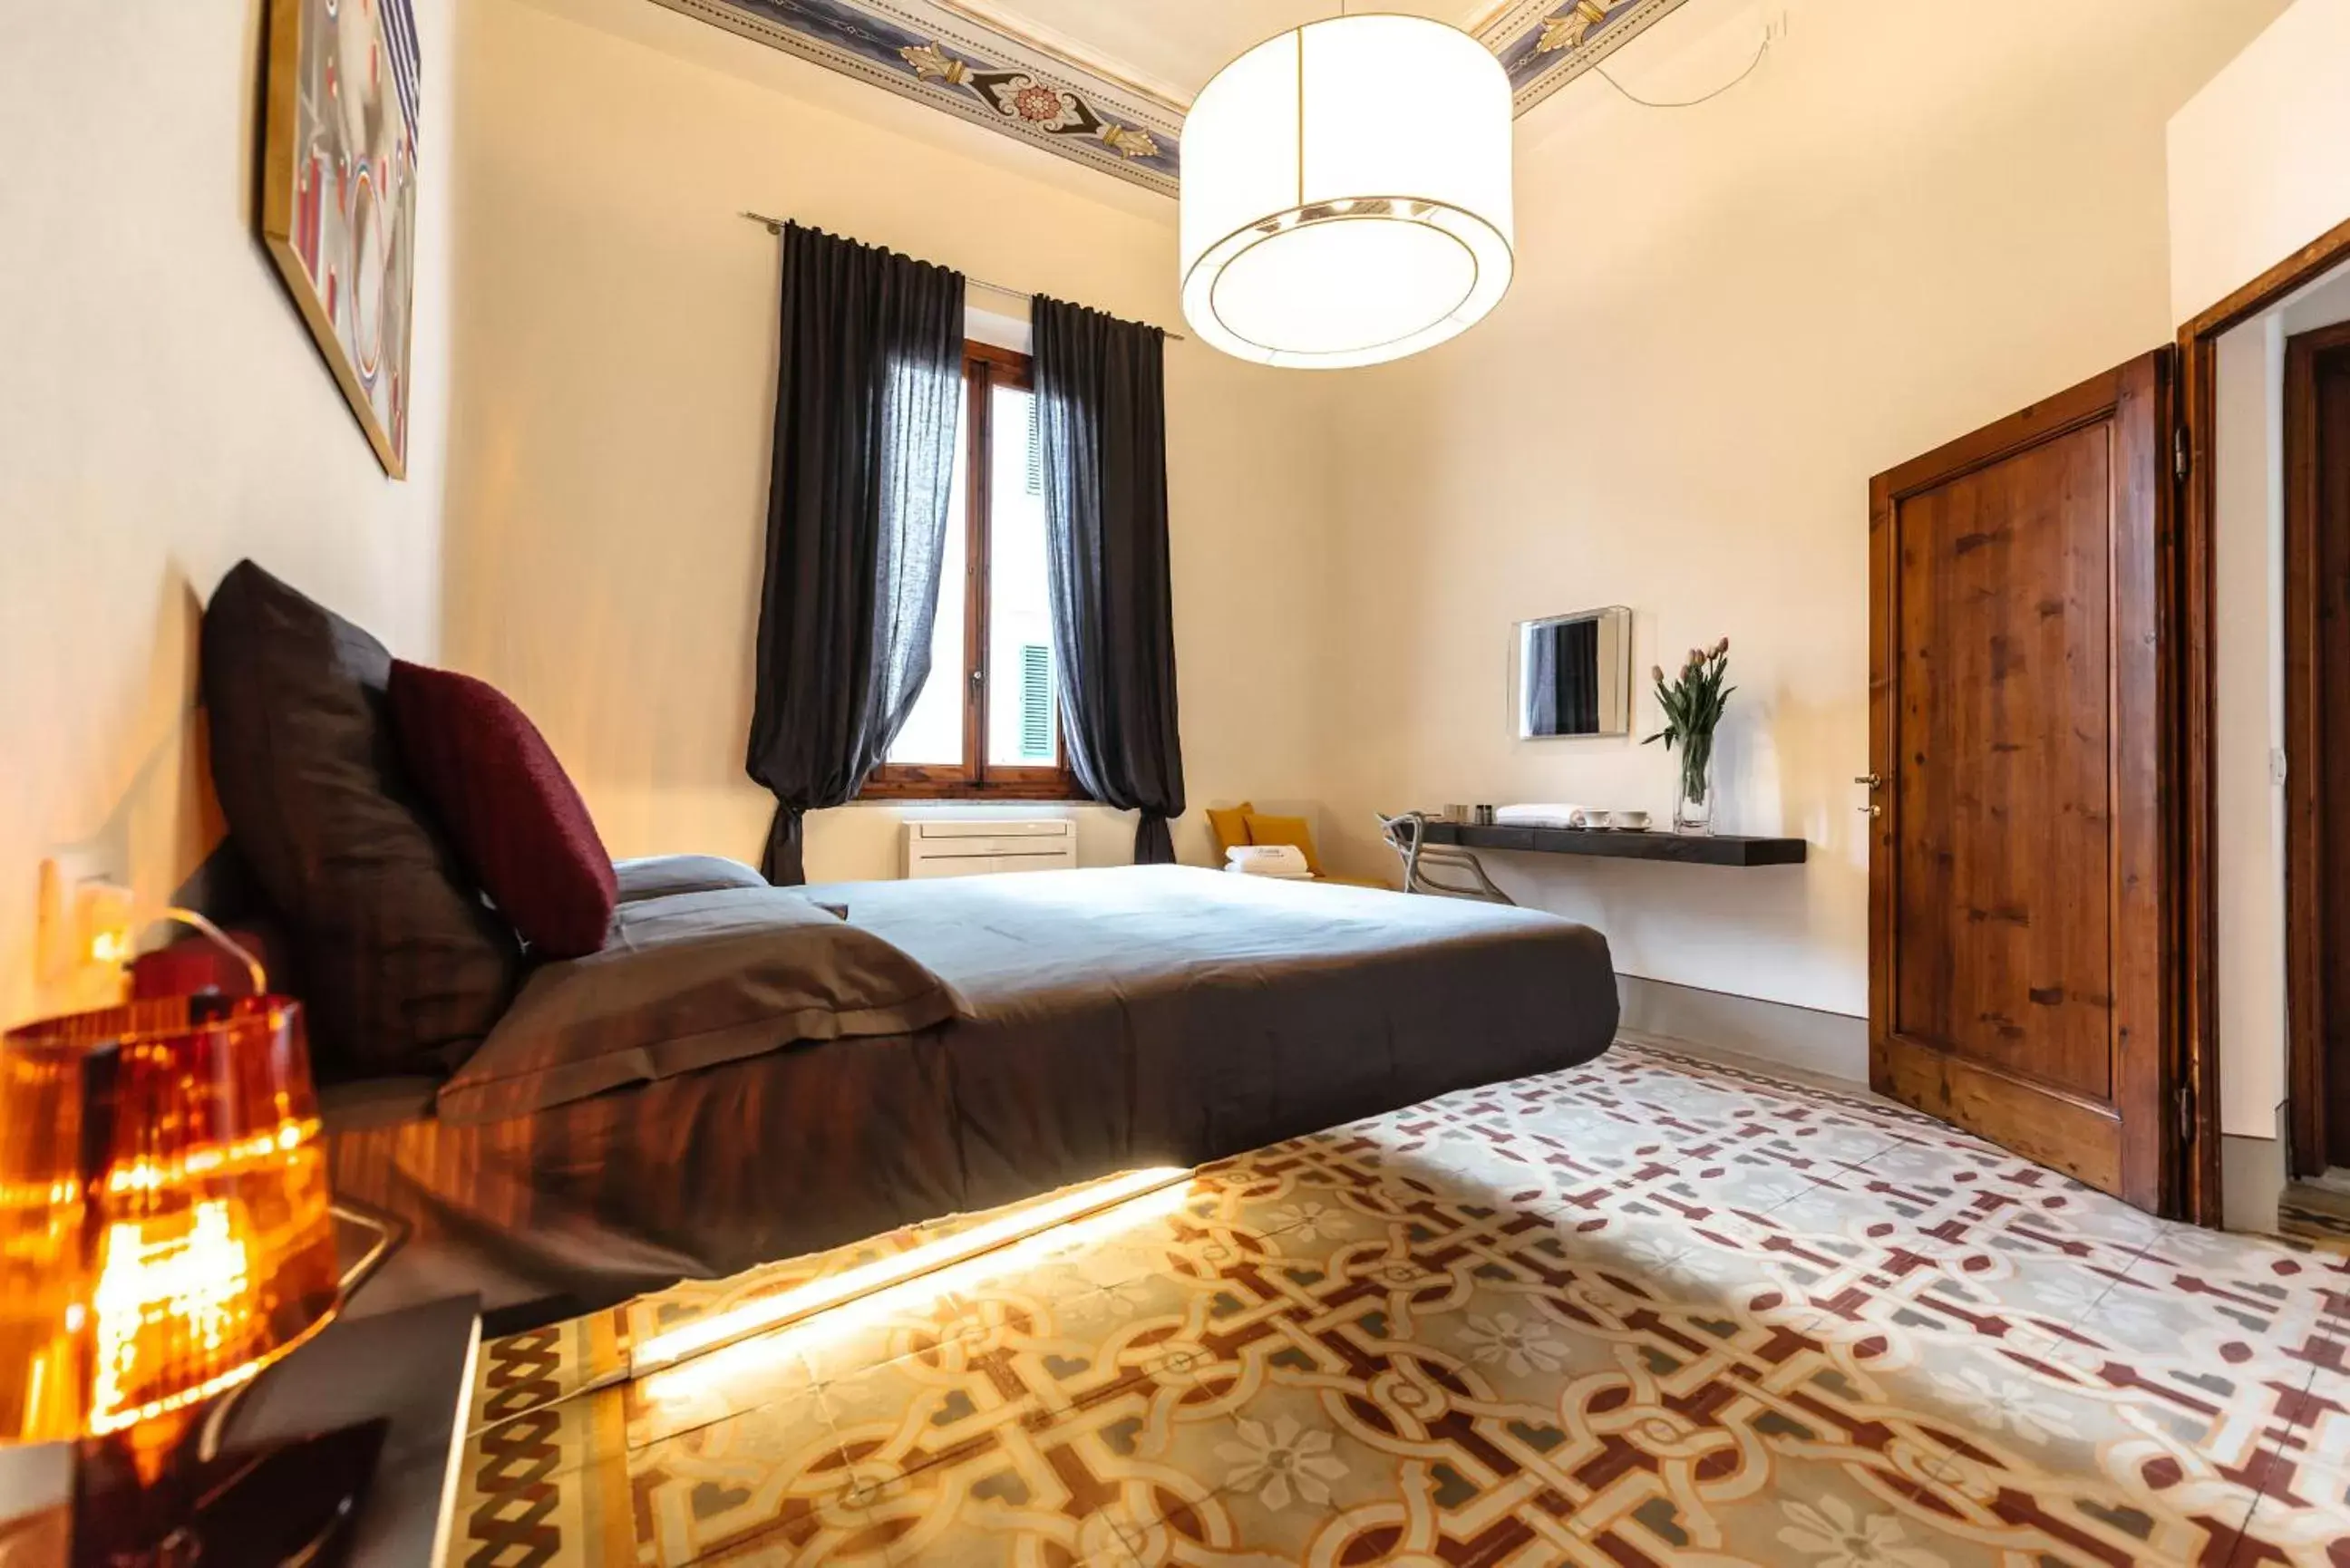 Bedroom, Room Photo in Residenza Cavour